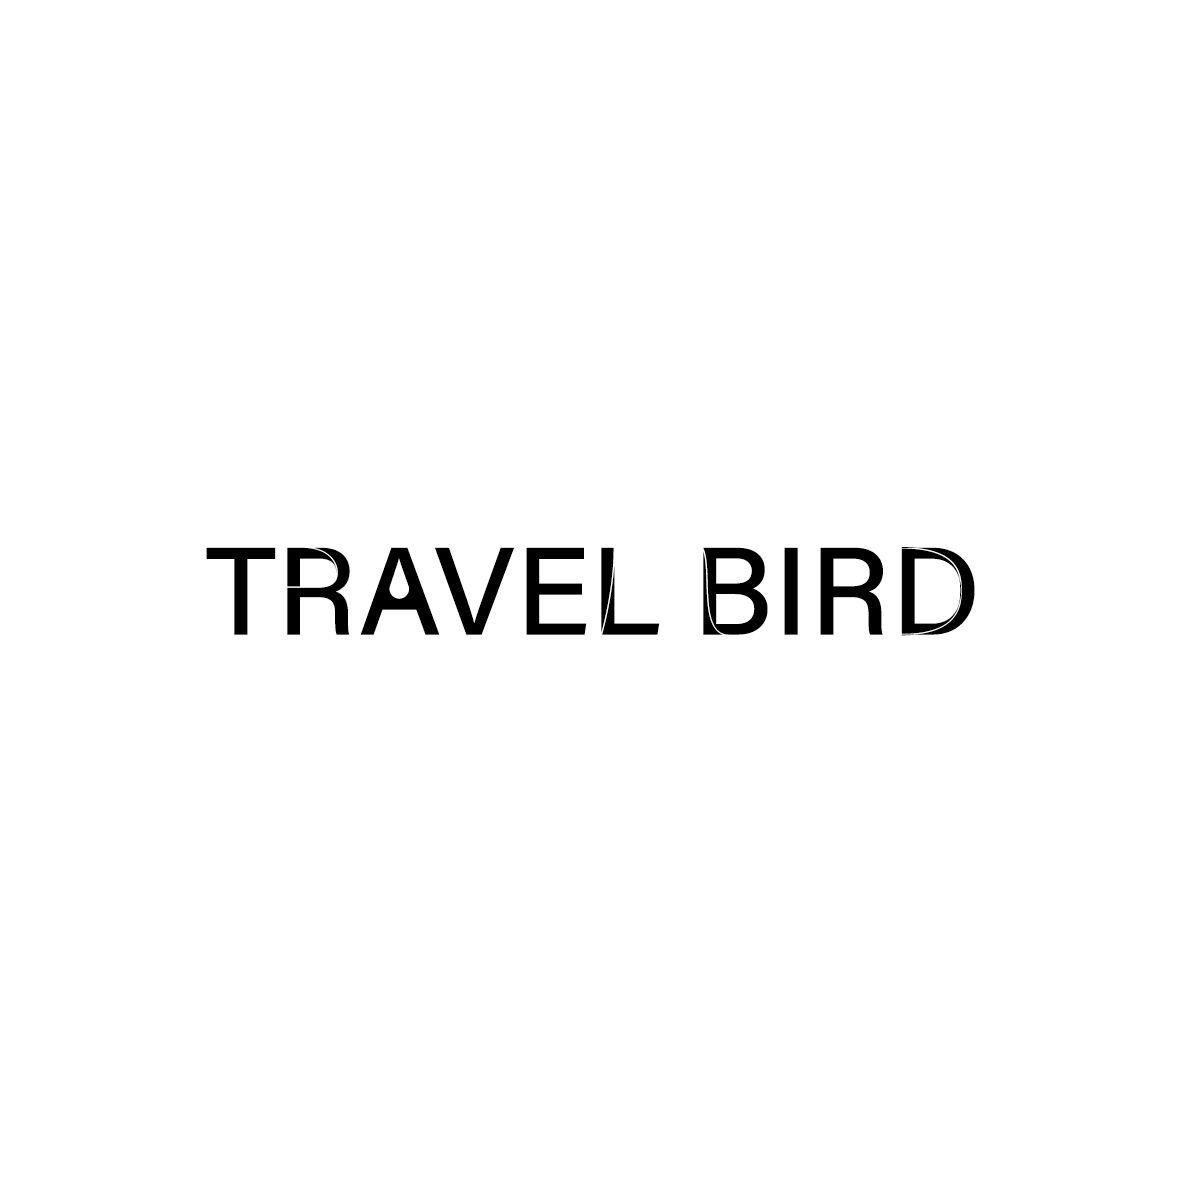 TRAVEL BIRD